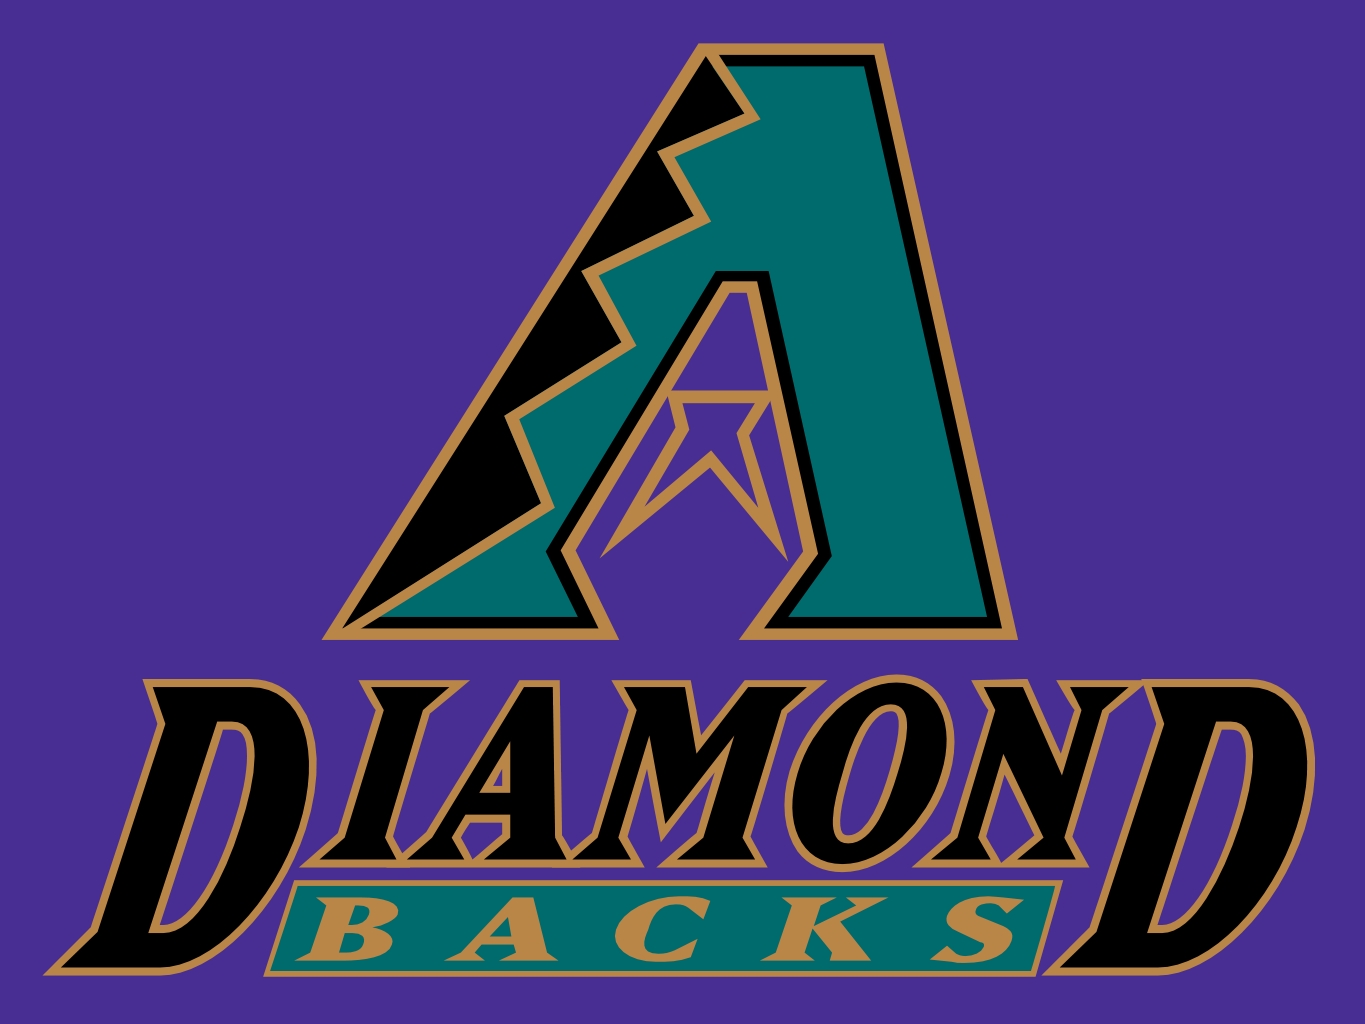 Arizona Diamondbacks Wallpaper And Background Image